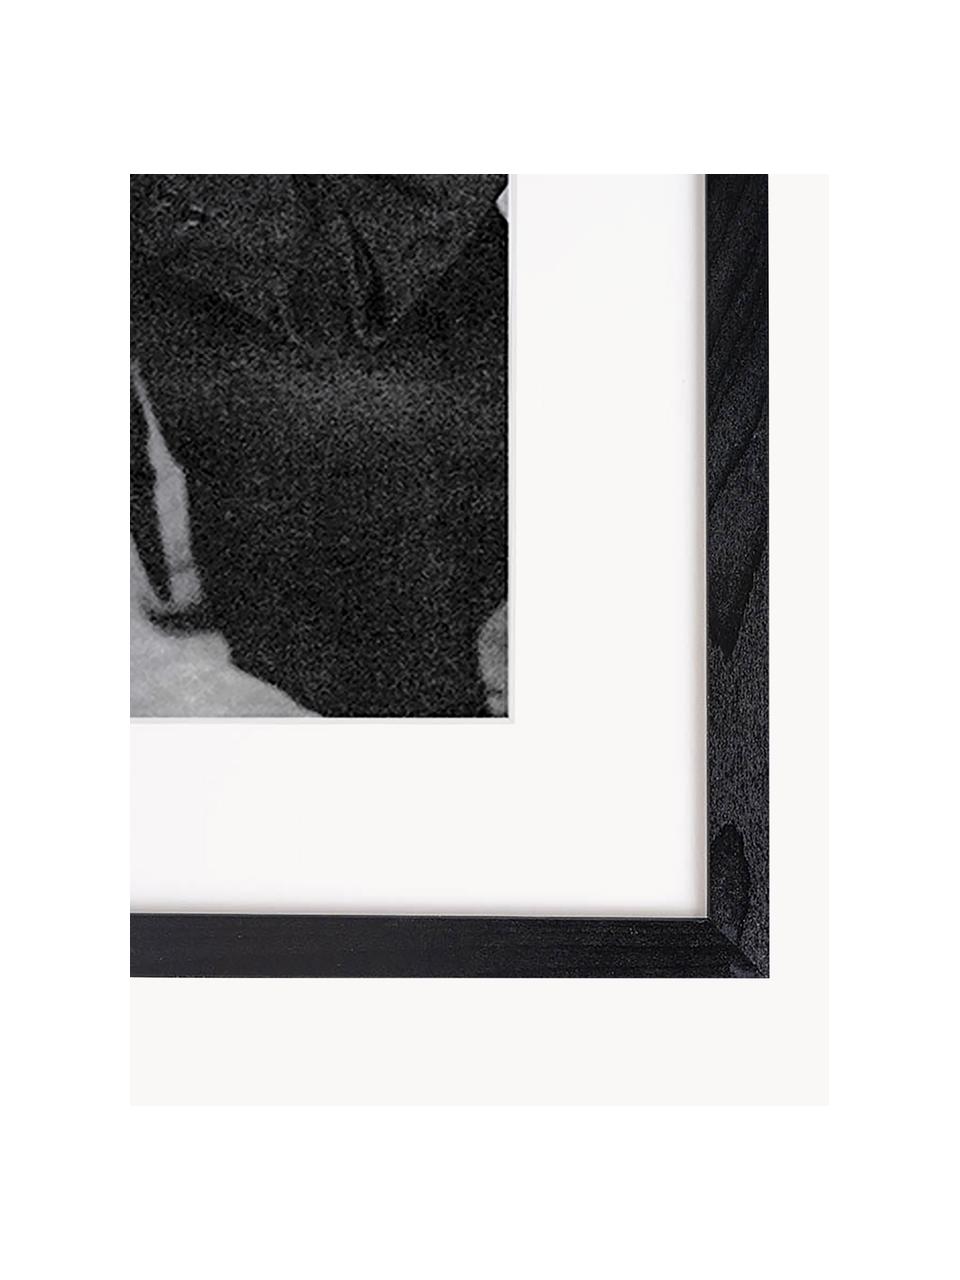 Gerahmte Fotografie James Dean with Camera, Rahmen: Buchenholz, FSC zertifizi, Bild: Digitaldruck auf Papier, , Front: Acrylglas, Schwarz, Off White, B 33 x H 43 cm